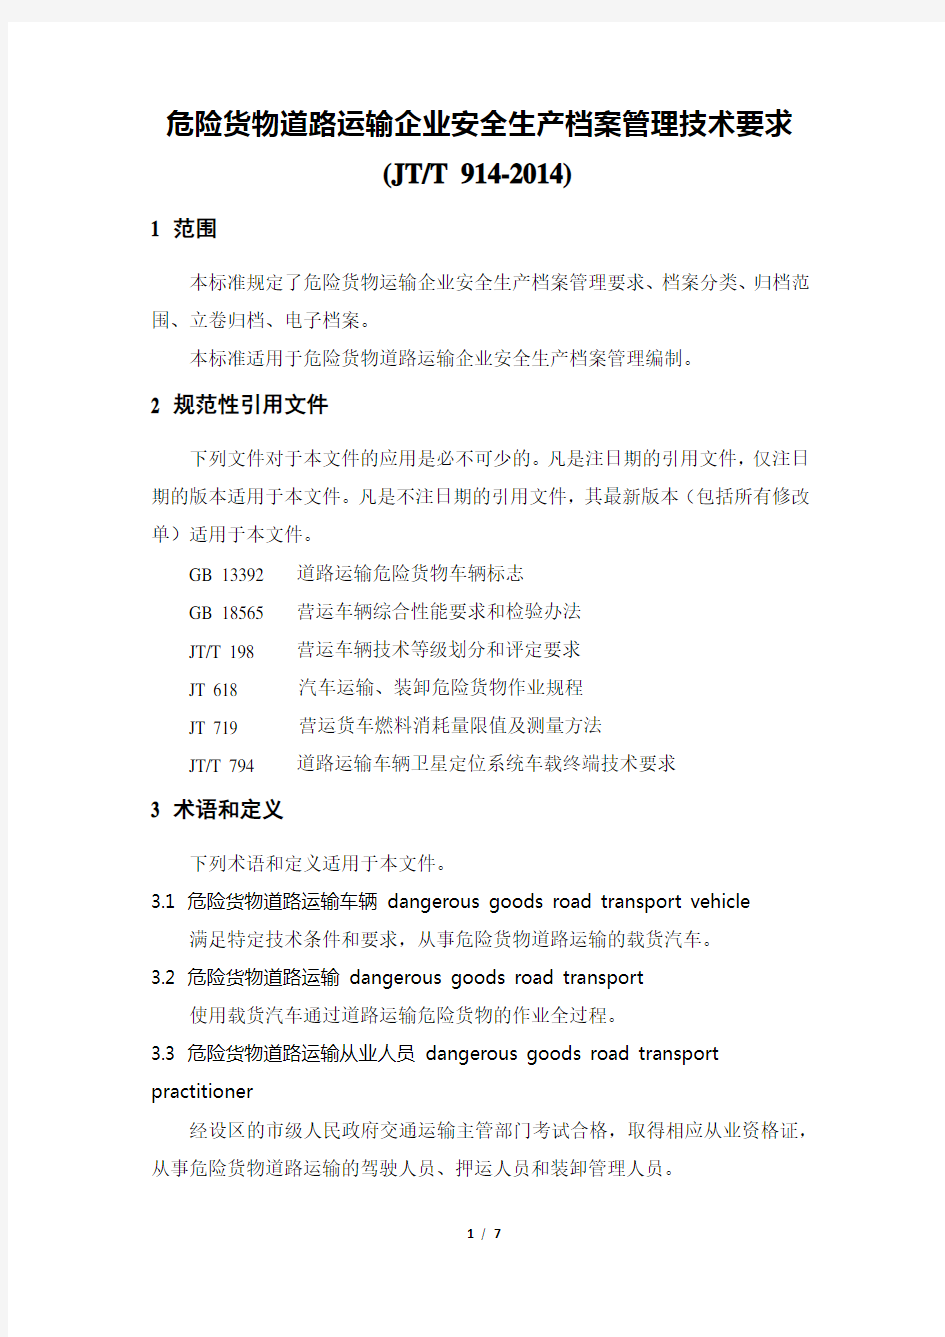 (JT-T914-2014)危险货物道路运输企业安全生产档案管理技术要求